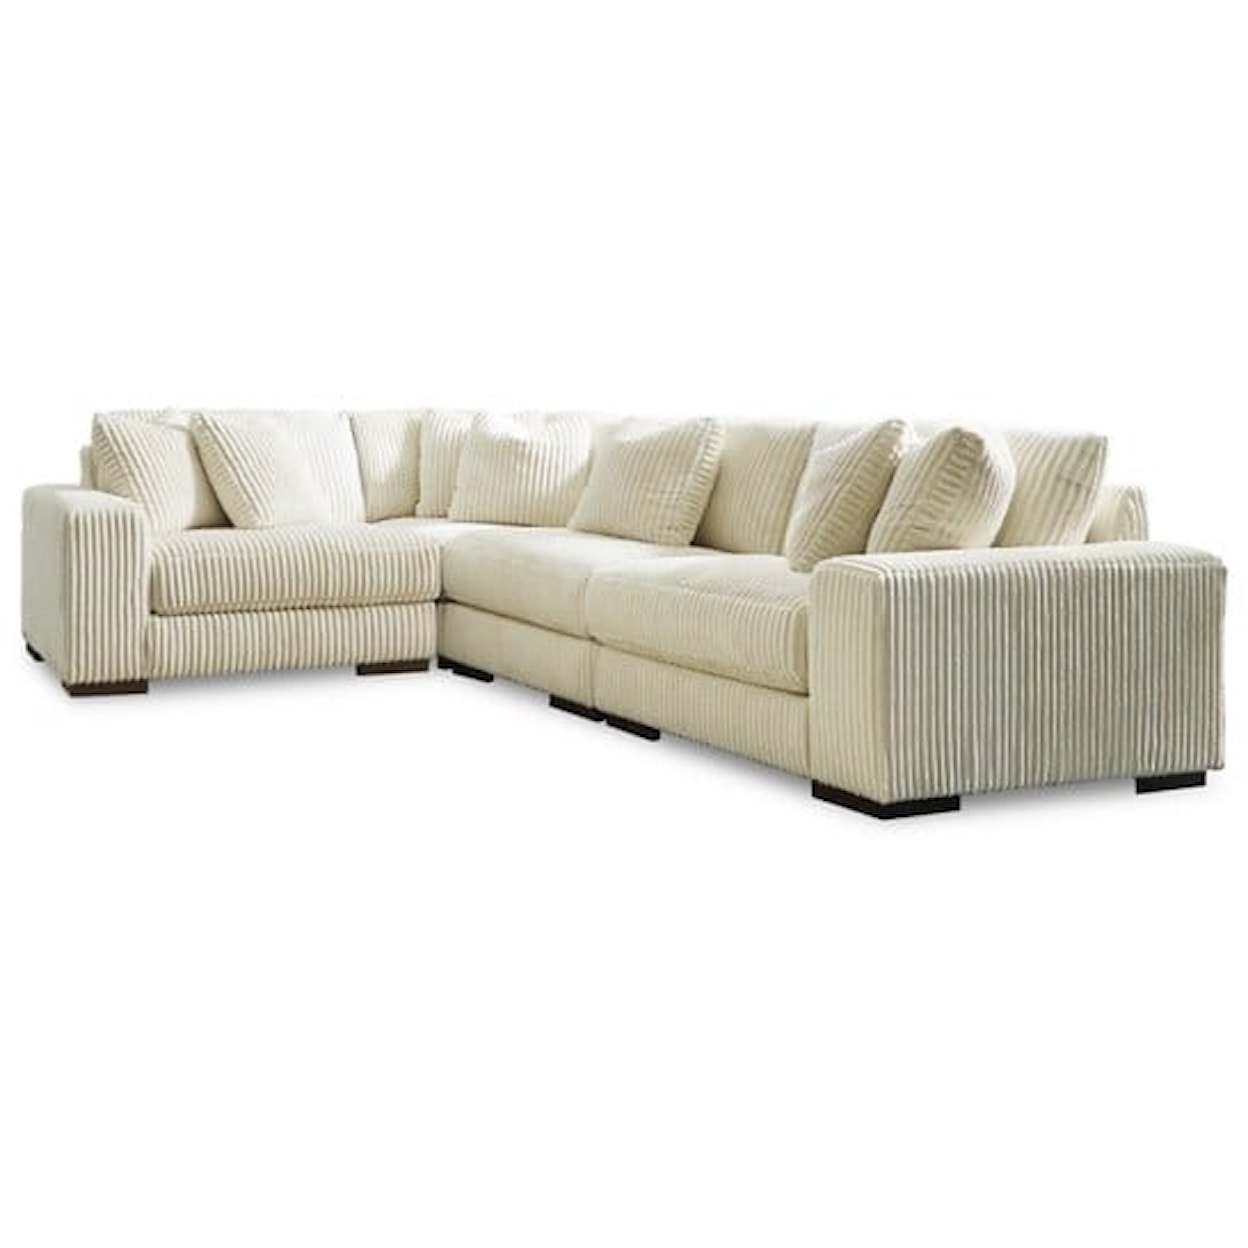 Benchcraft Lindyn Sectional Sofa